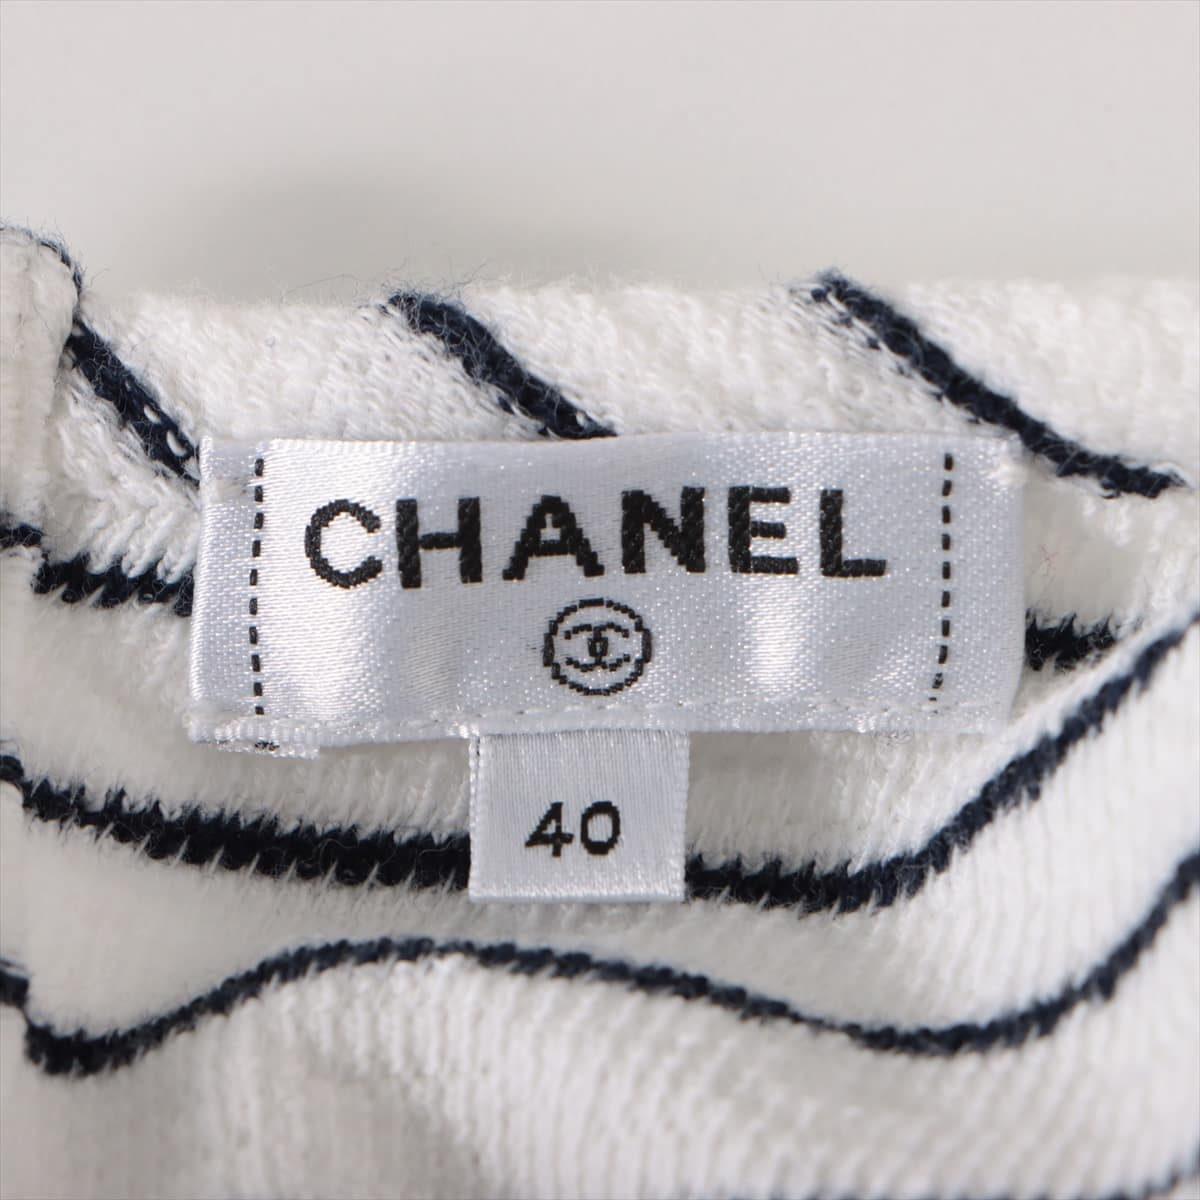 Chanel P55 Cotton Tank top 40 Ladies' White x navy